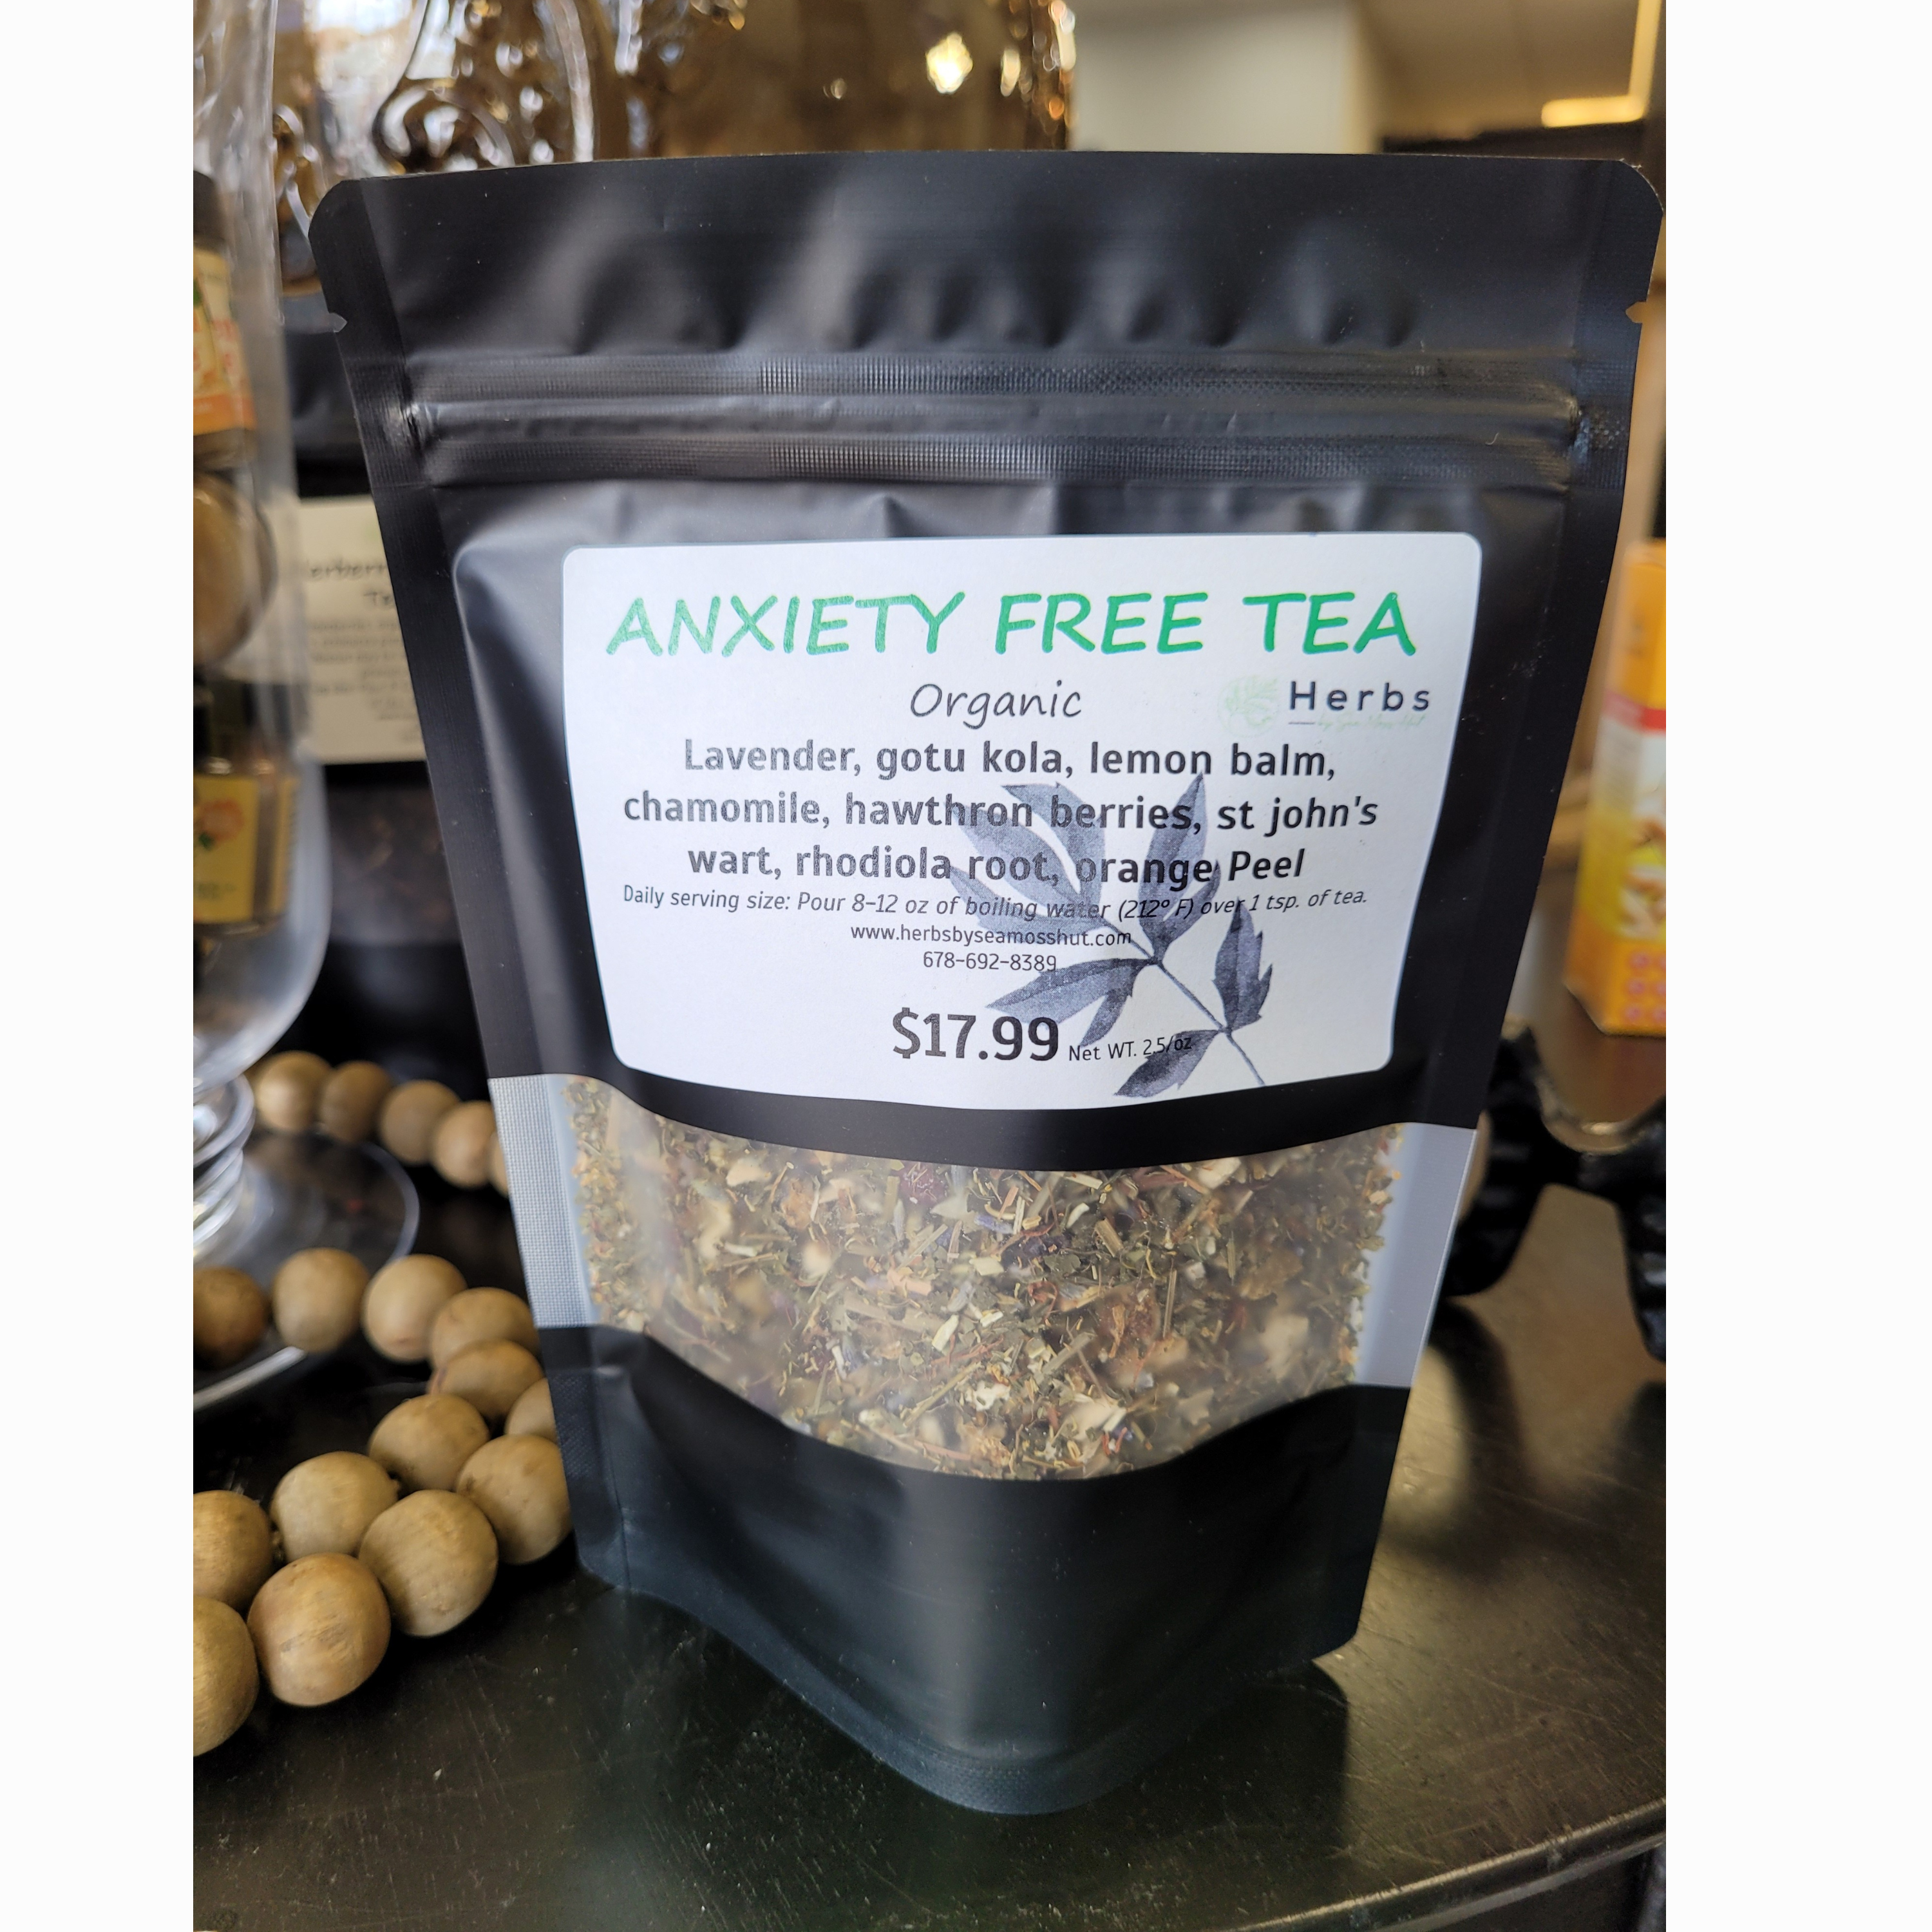 Antiety Free Tea